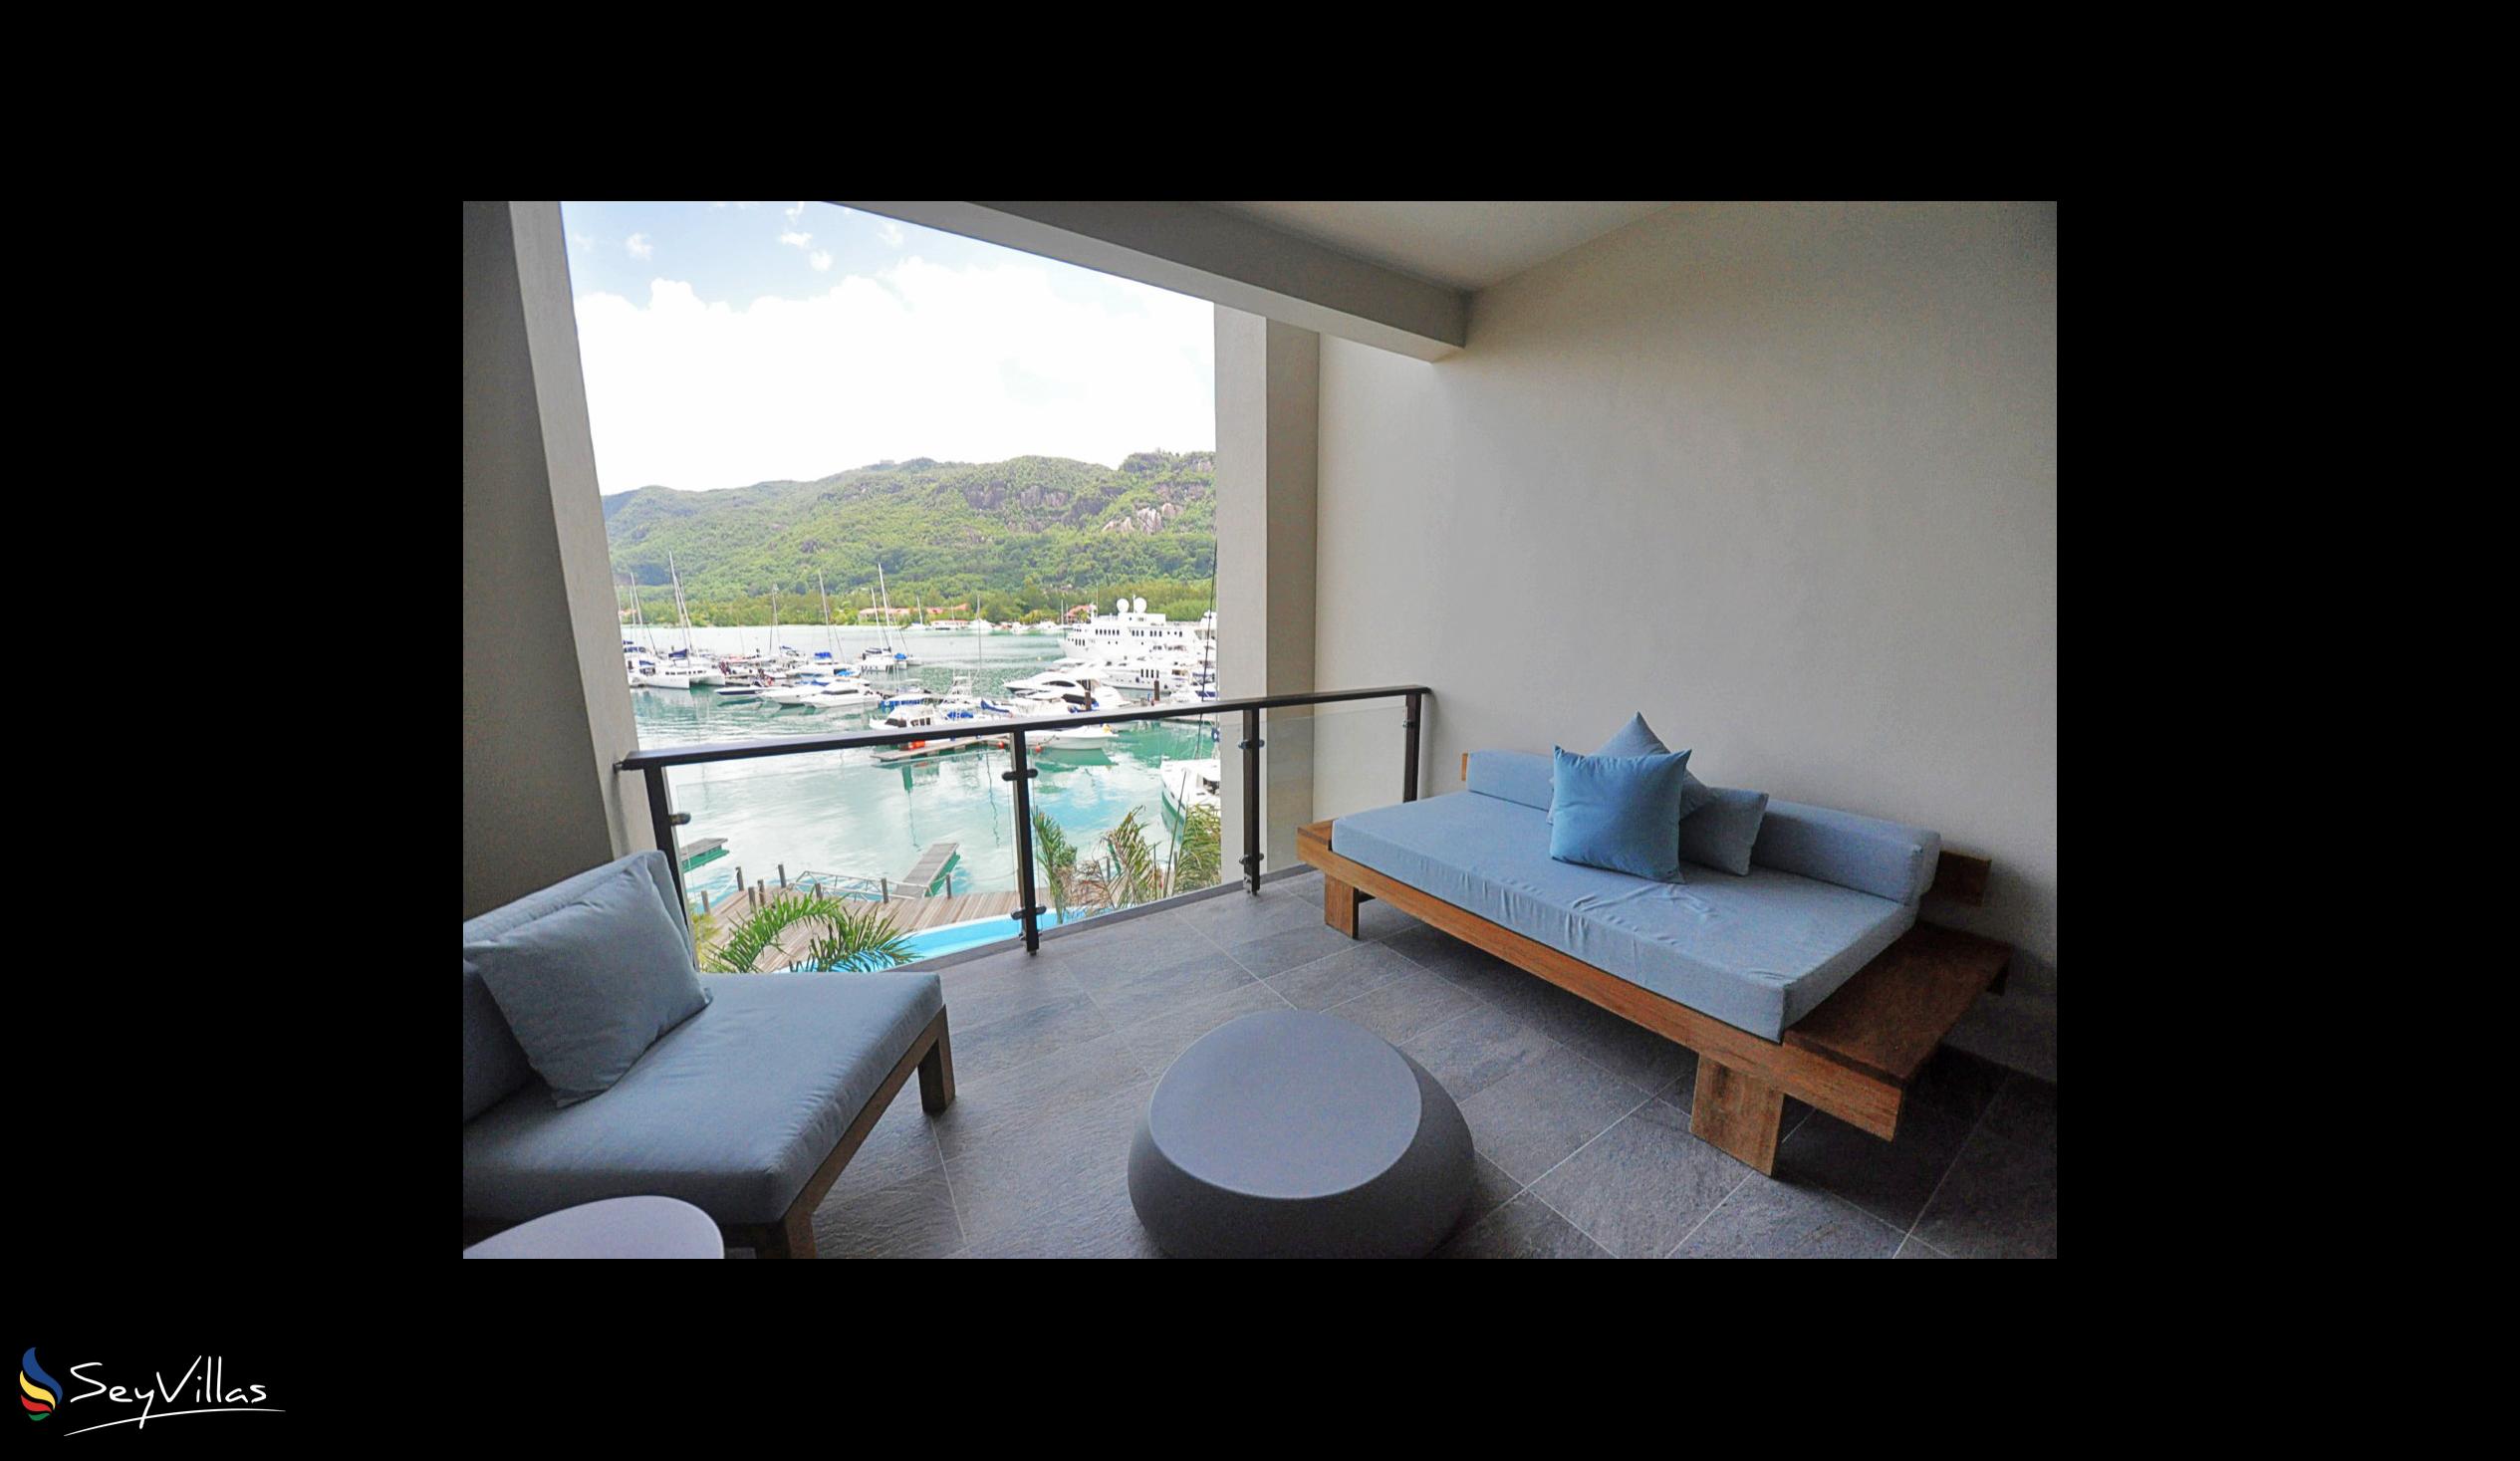 Foto 66: Eden Bleu Hotel - Luxus Suite mit Marinablick - Mahé (Seychellen)